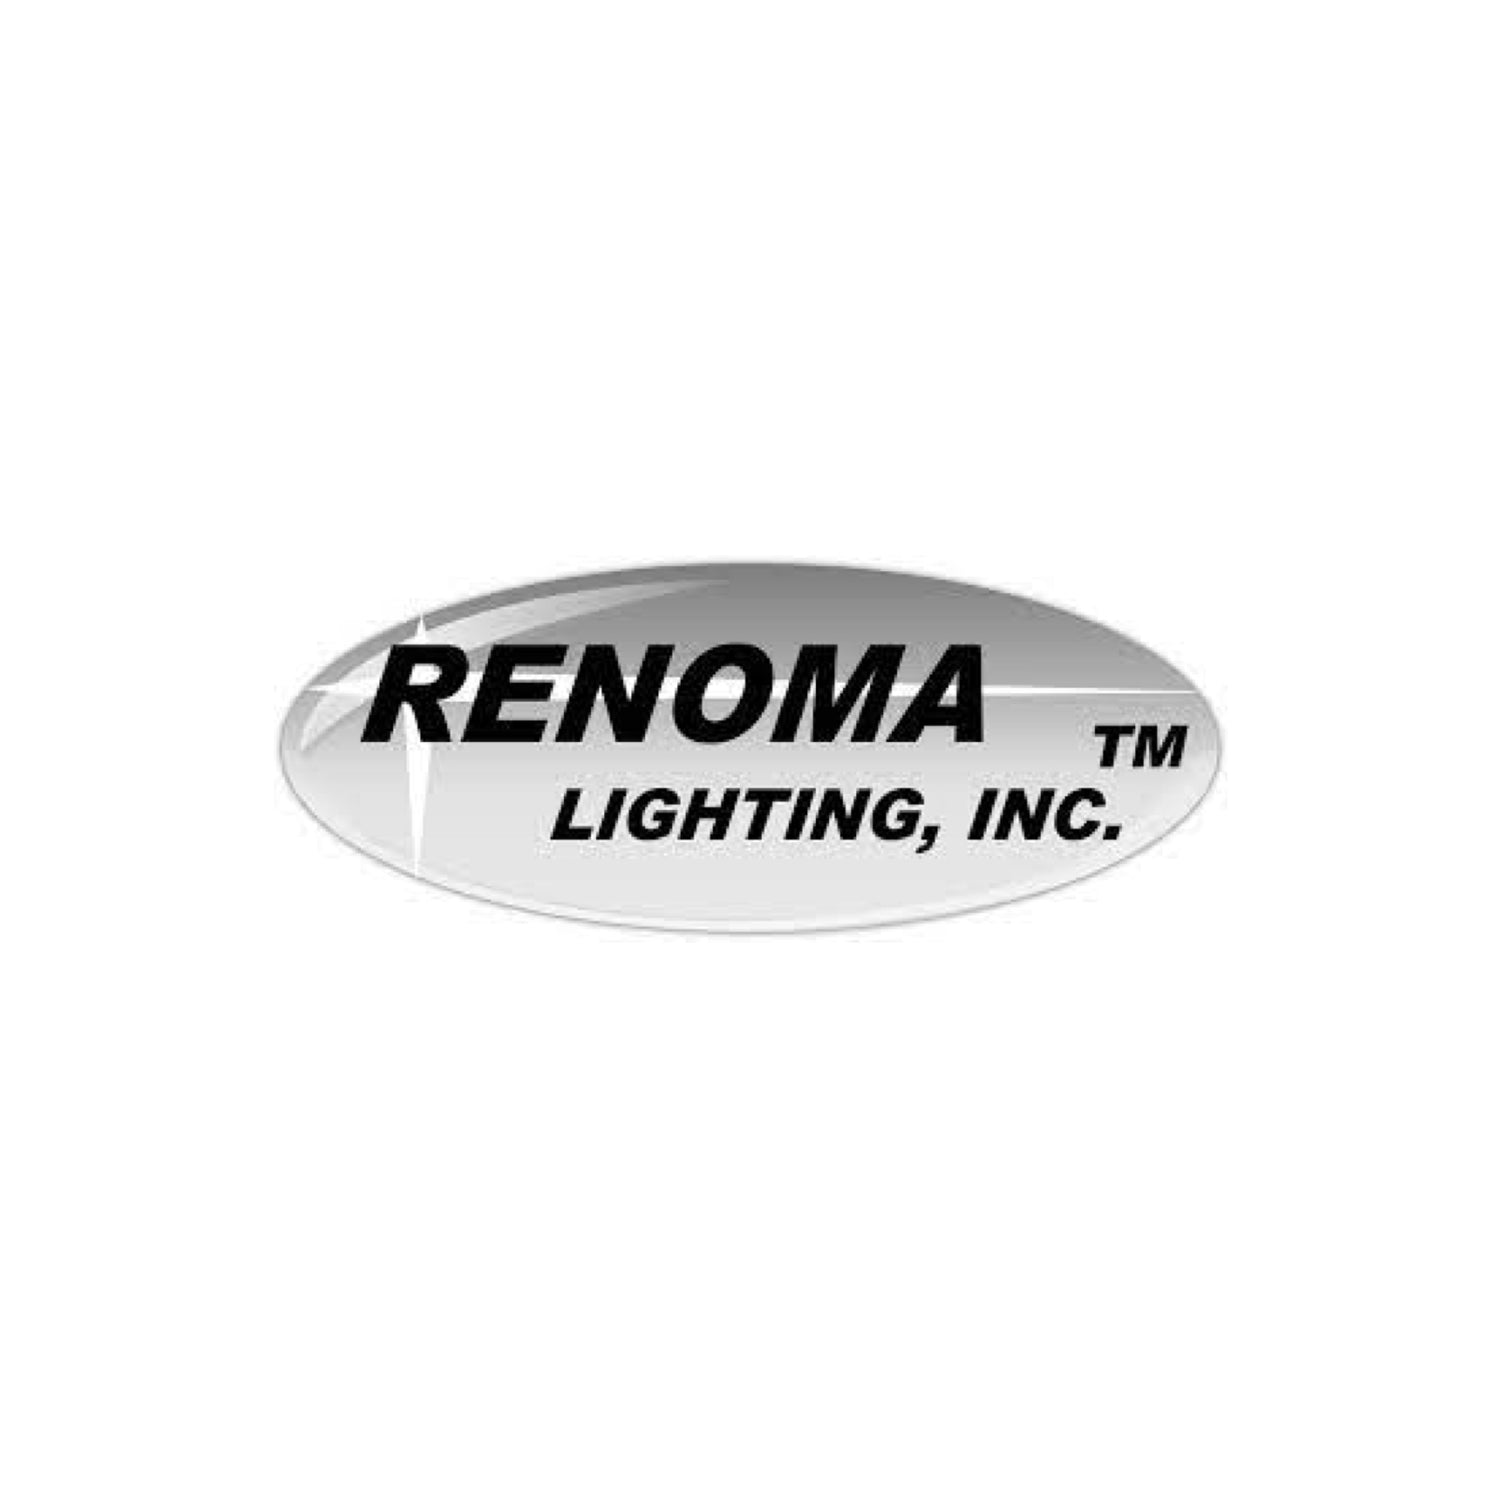 RENOMA LIGHTING